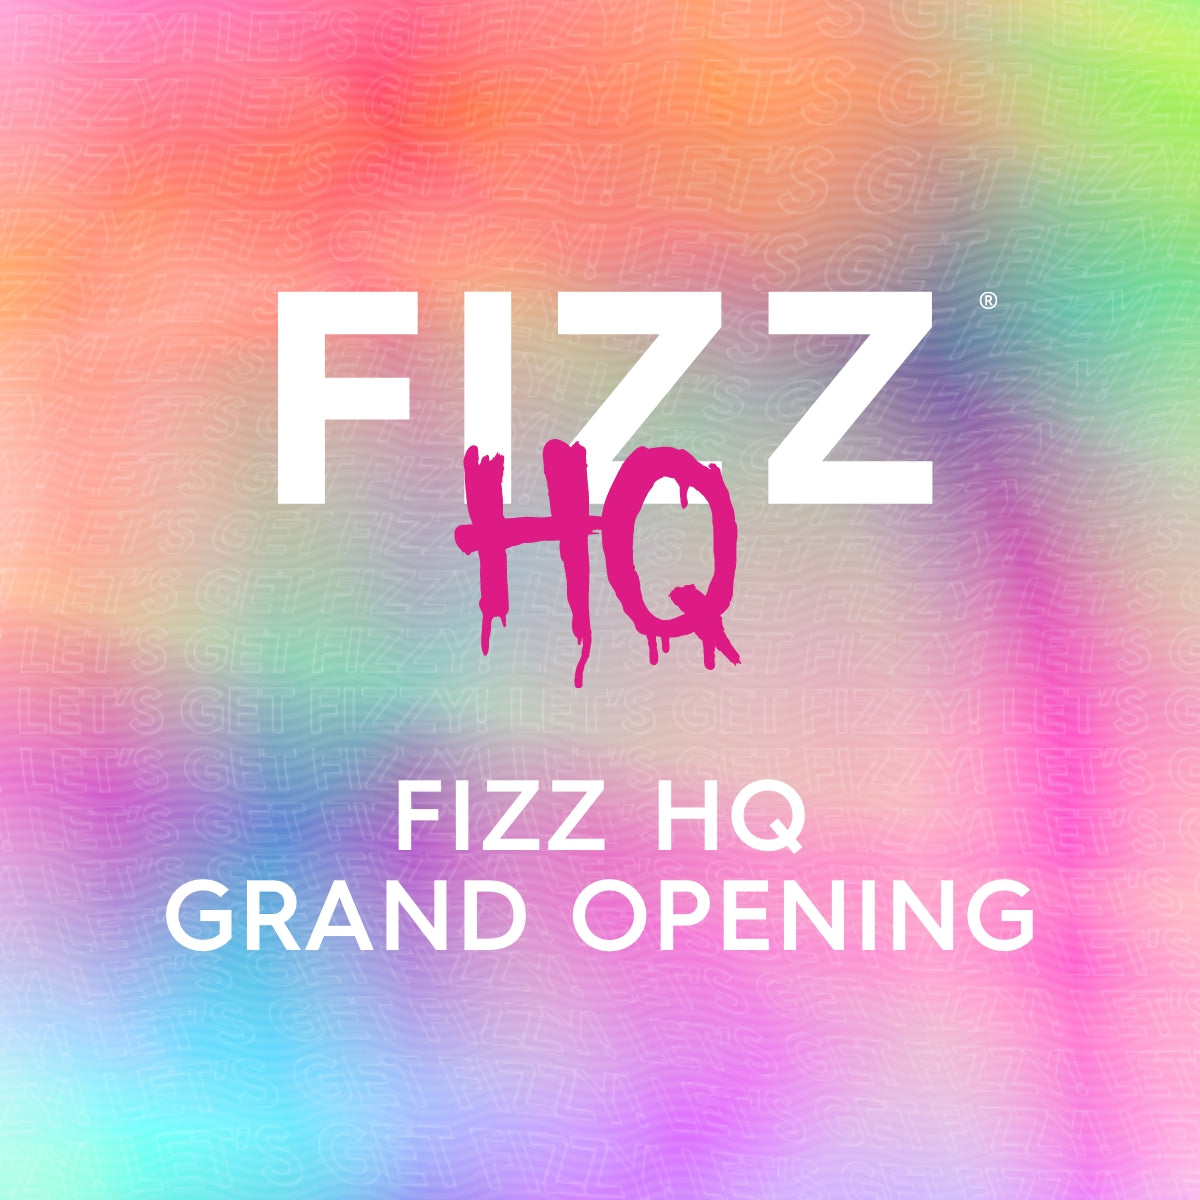 FIZZ HQ Grand Opening